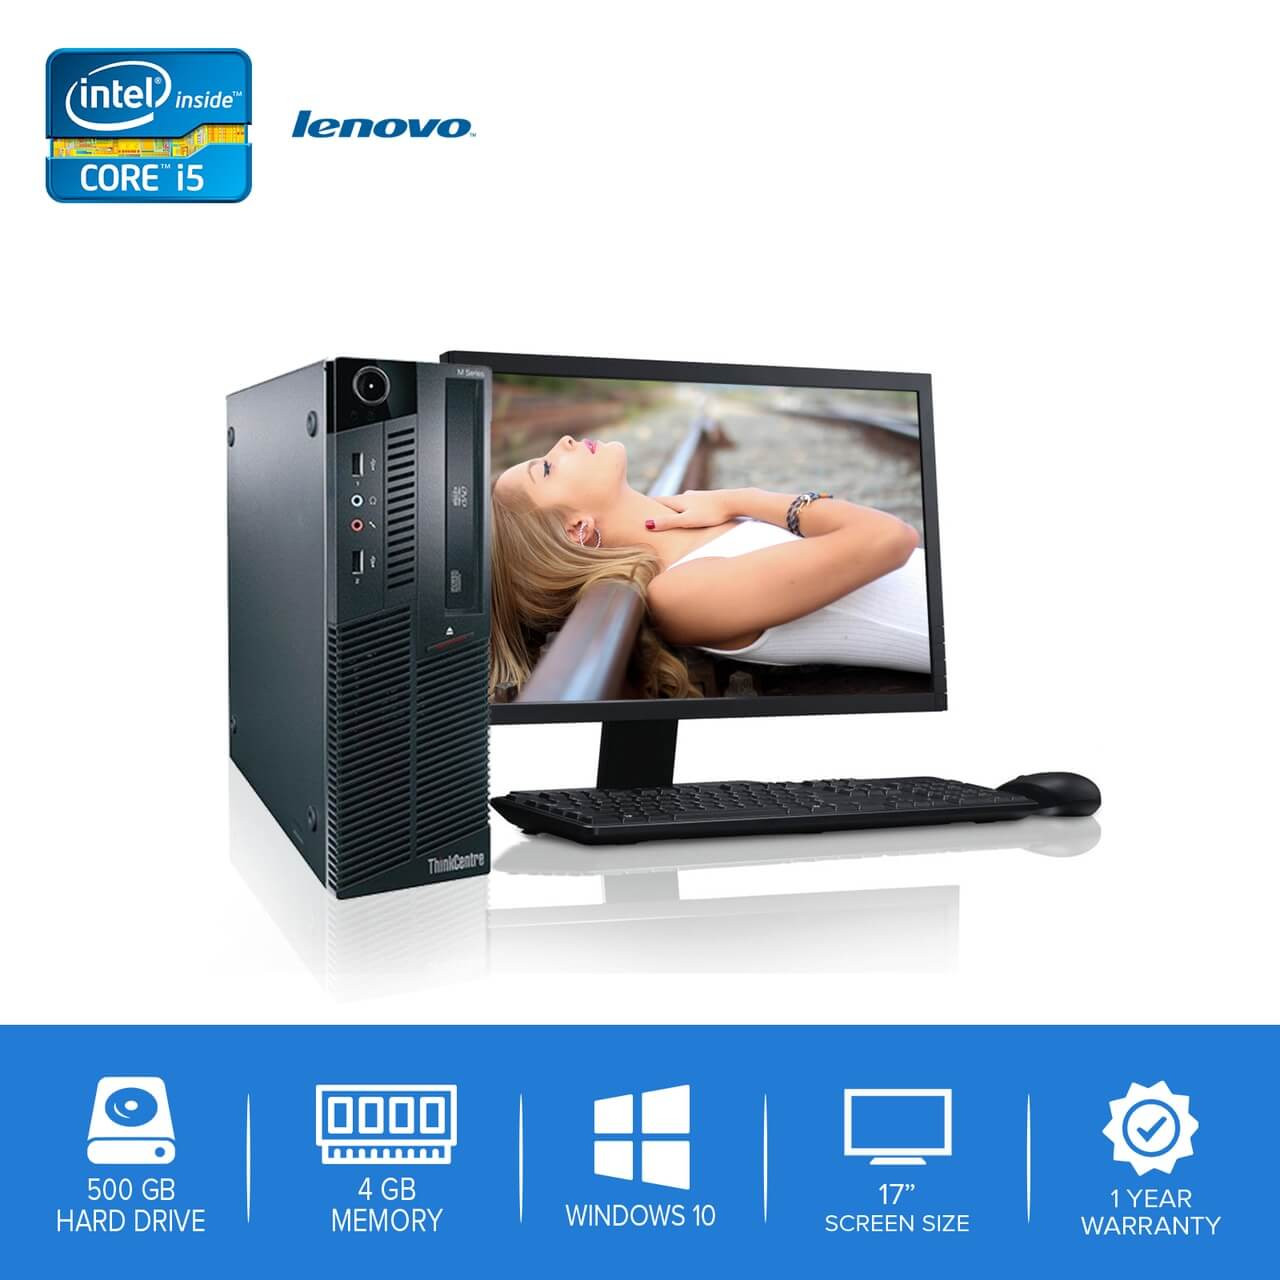 Lenovo-ThinkCentre M90 M91 Desktop Computer PC – Intel Core i5- 4GB Memory  – 500GB Hard Drive - Windows 10 with 17” LCD